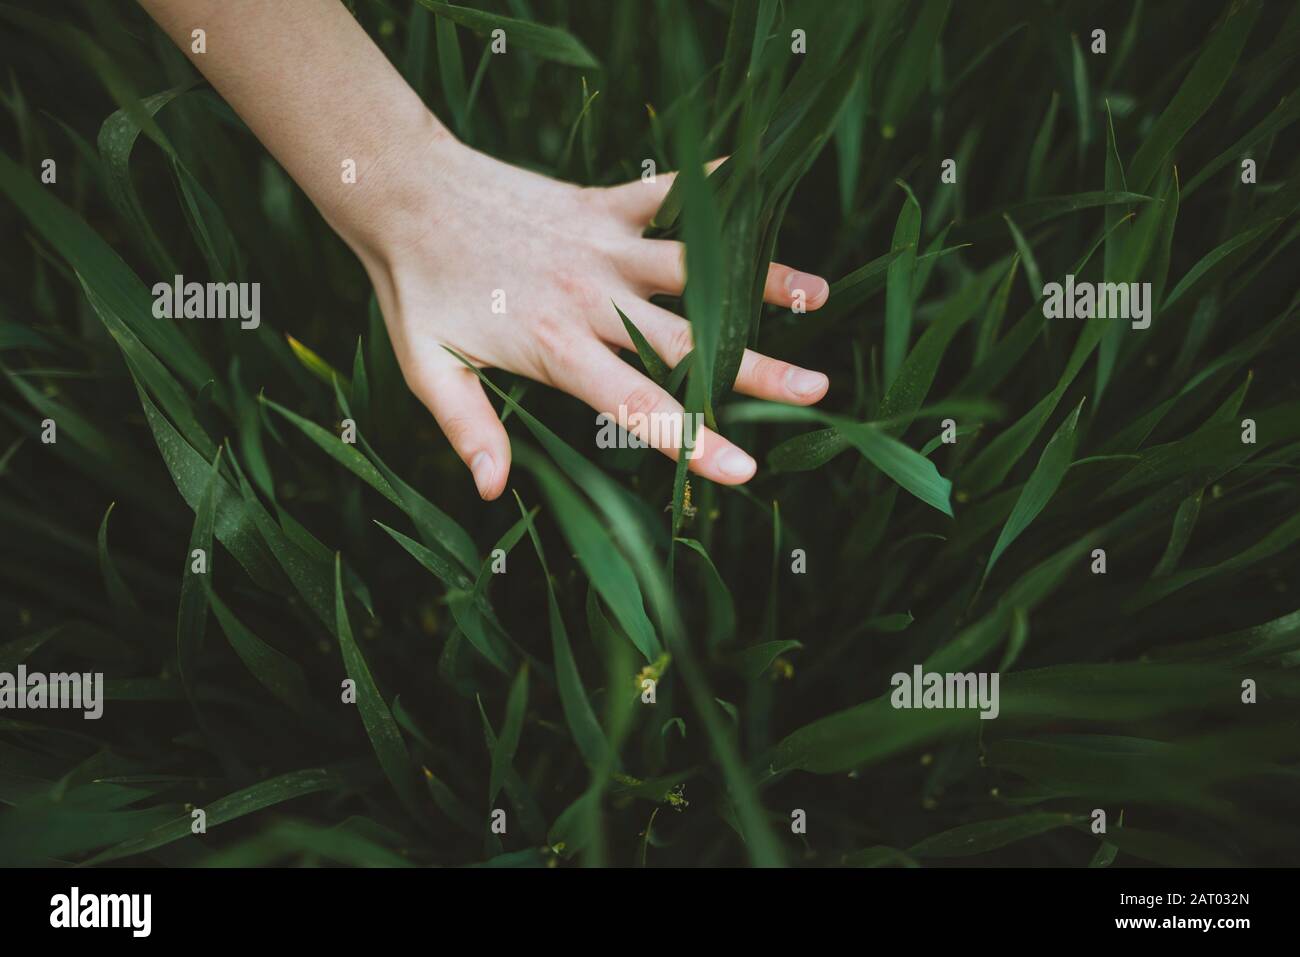 Woman's hand touching grass Stock Photo